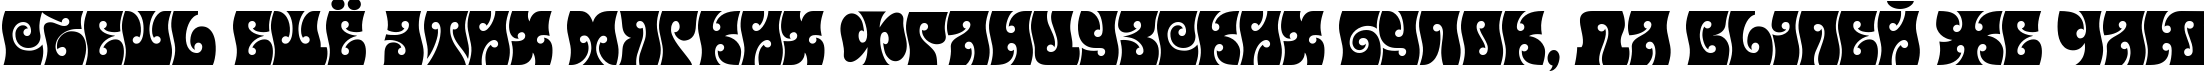 Пример написания шрифтом Musetta текста на русском